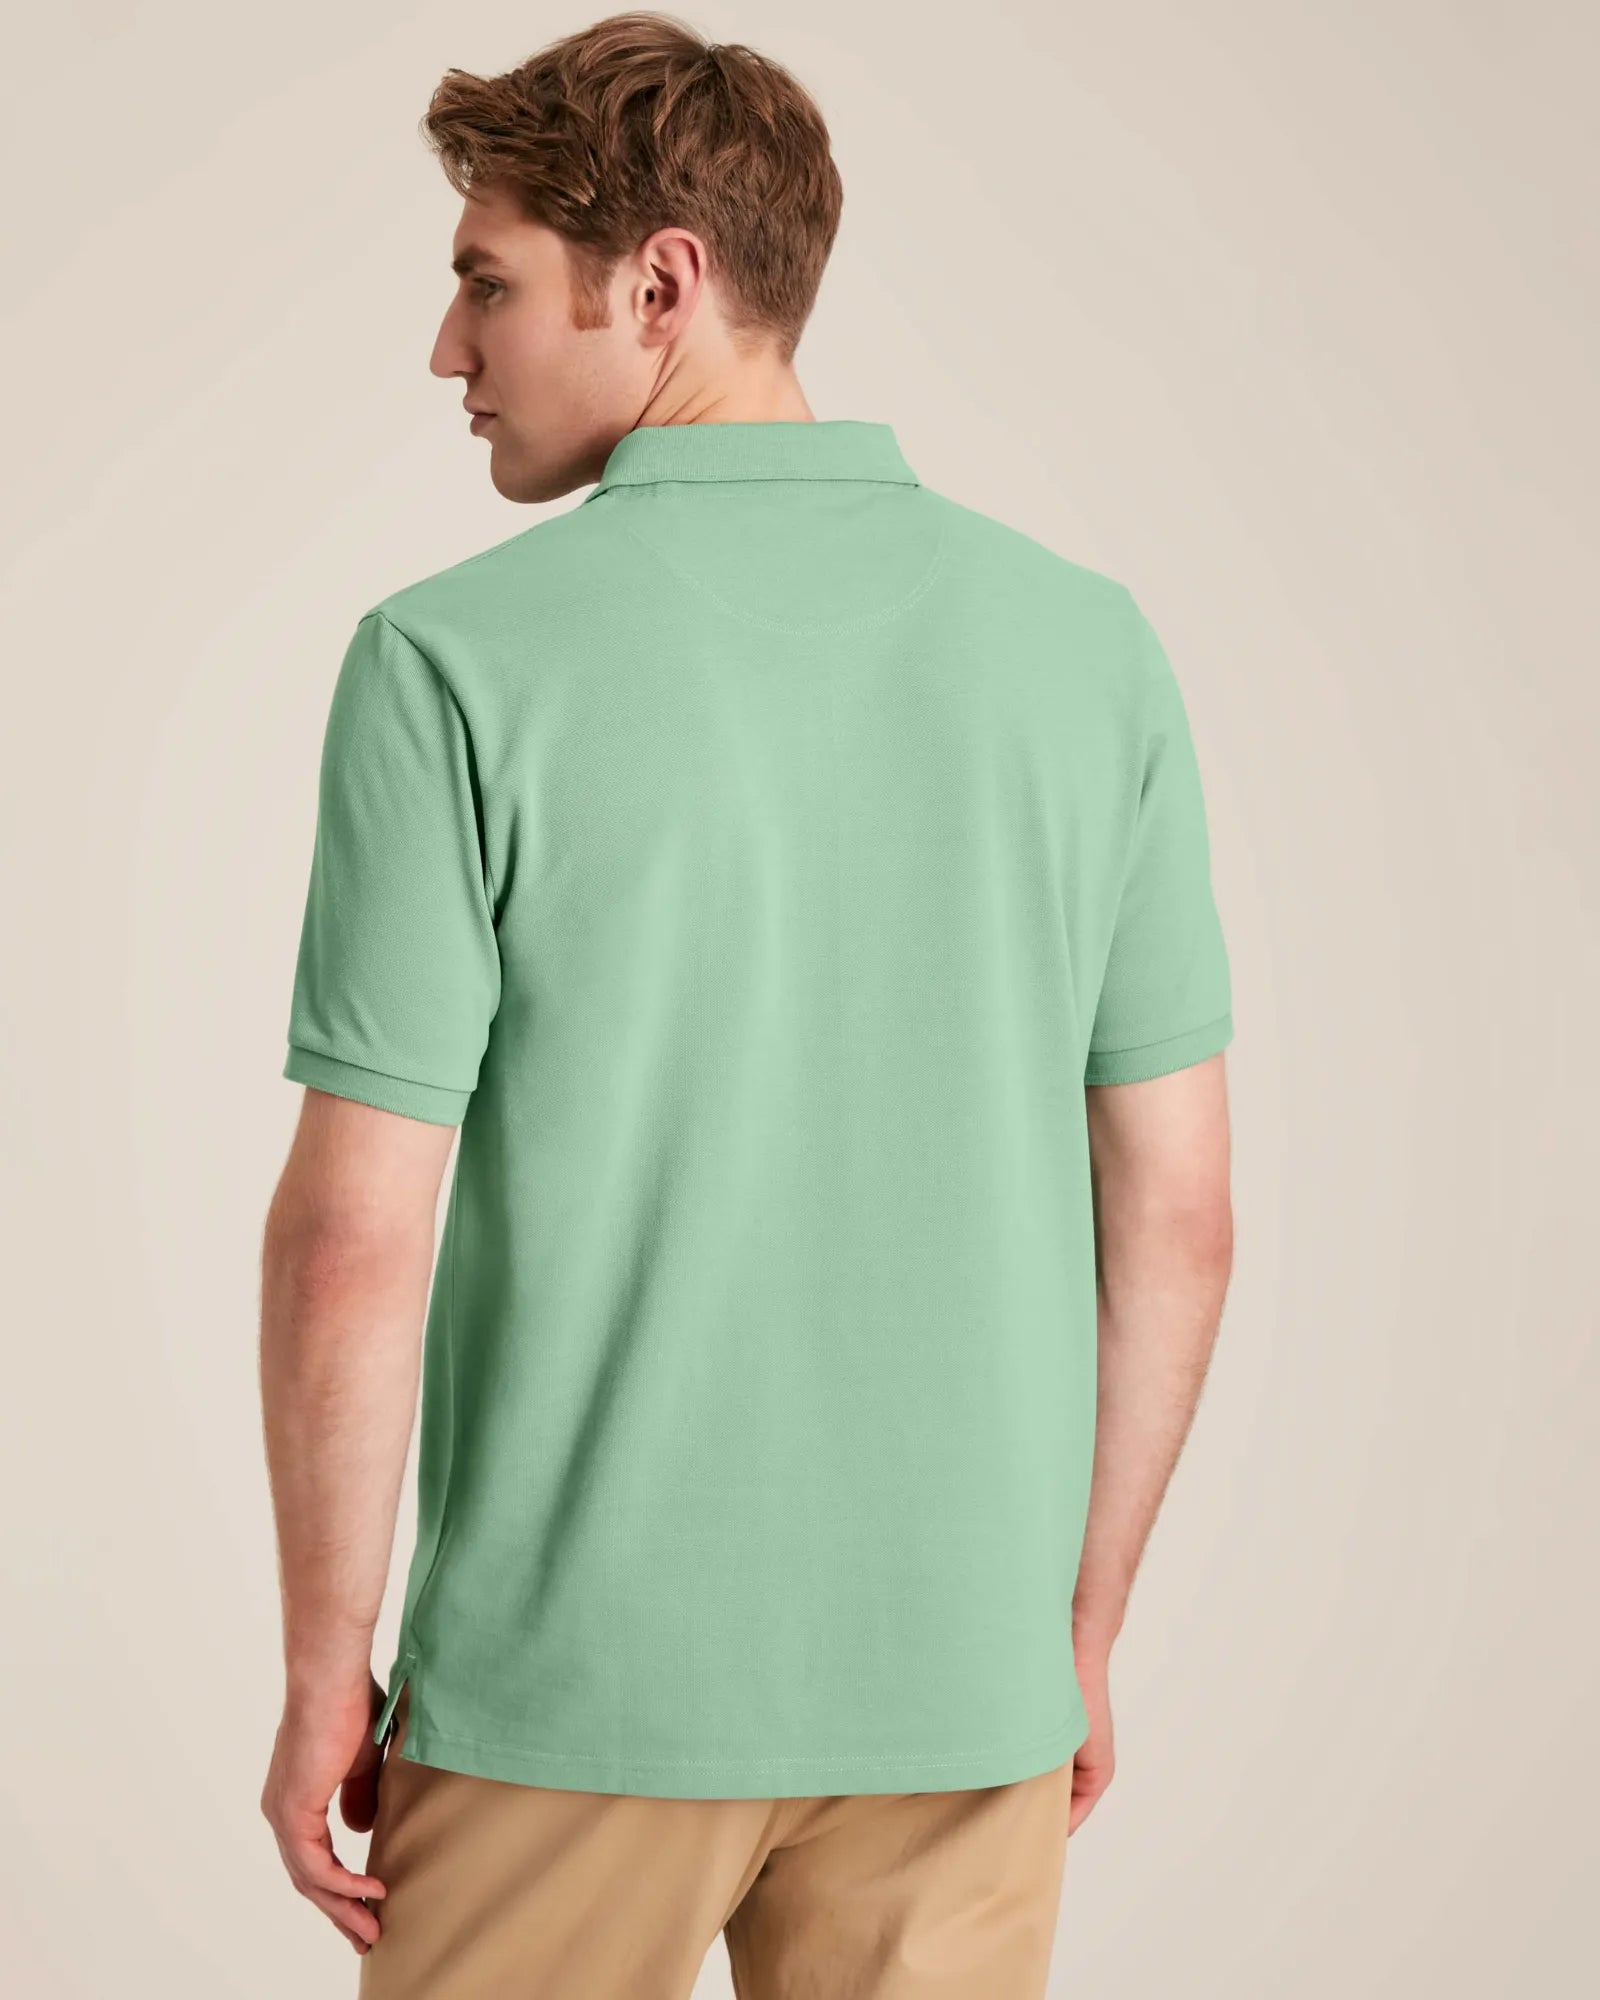 Woody Sporting Green Cotton Polo Shirt